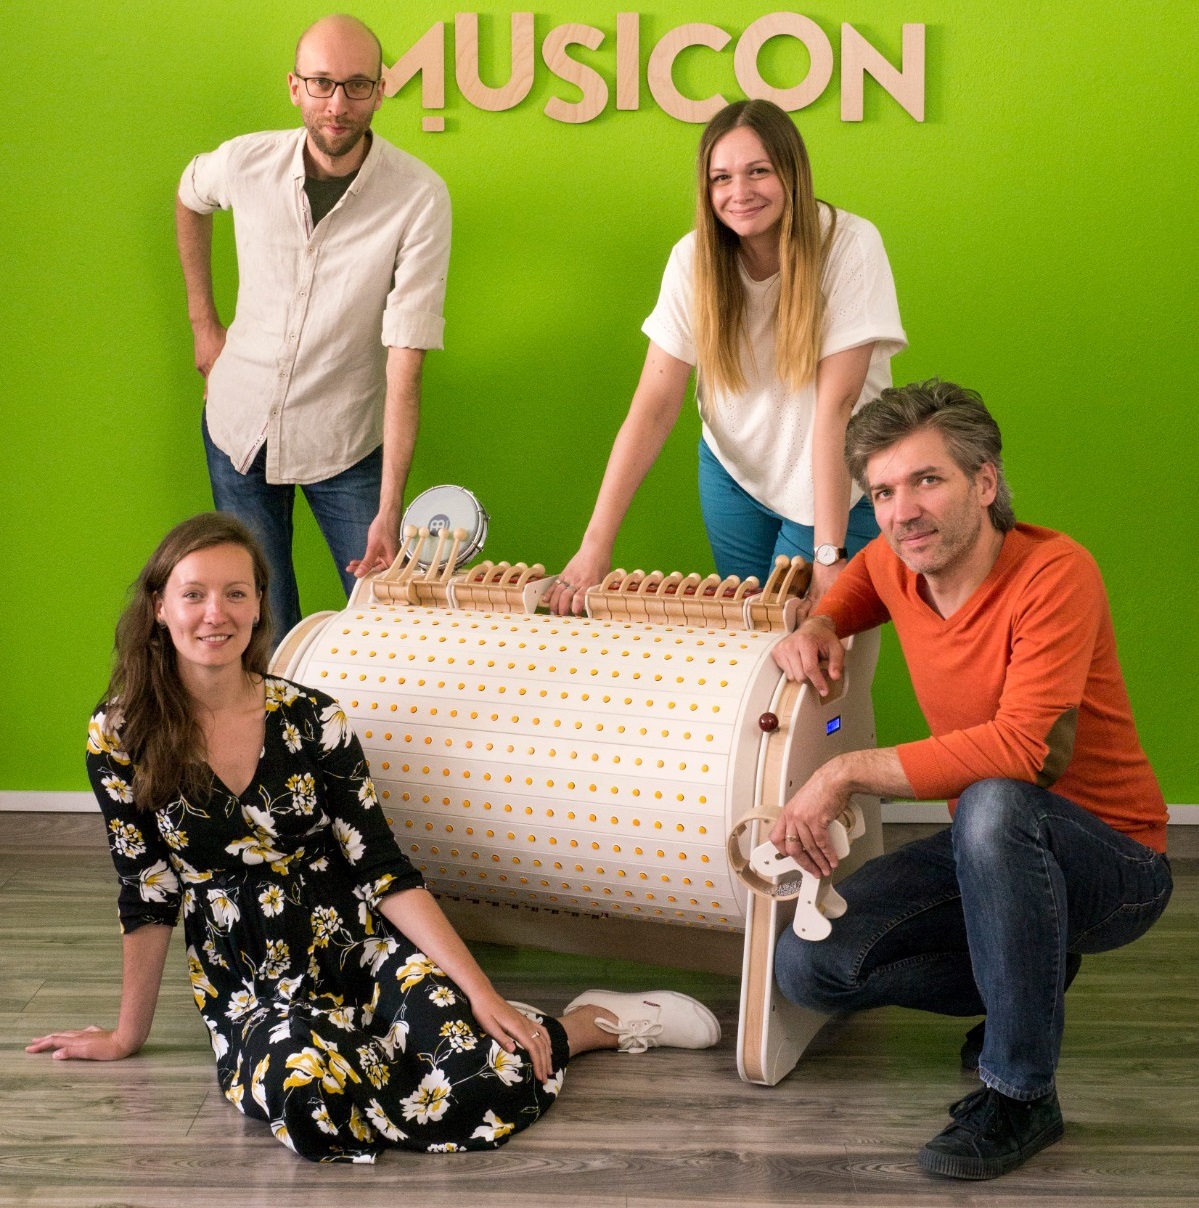 In the PICTURE around the Musicon device: Kamil Laszuk, Ida Laszuk, Jakub Kozik, Natalia Komar-Piętaszek. Behind them, the inscription: Musicon